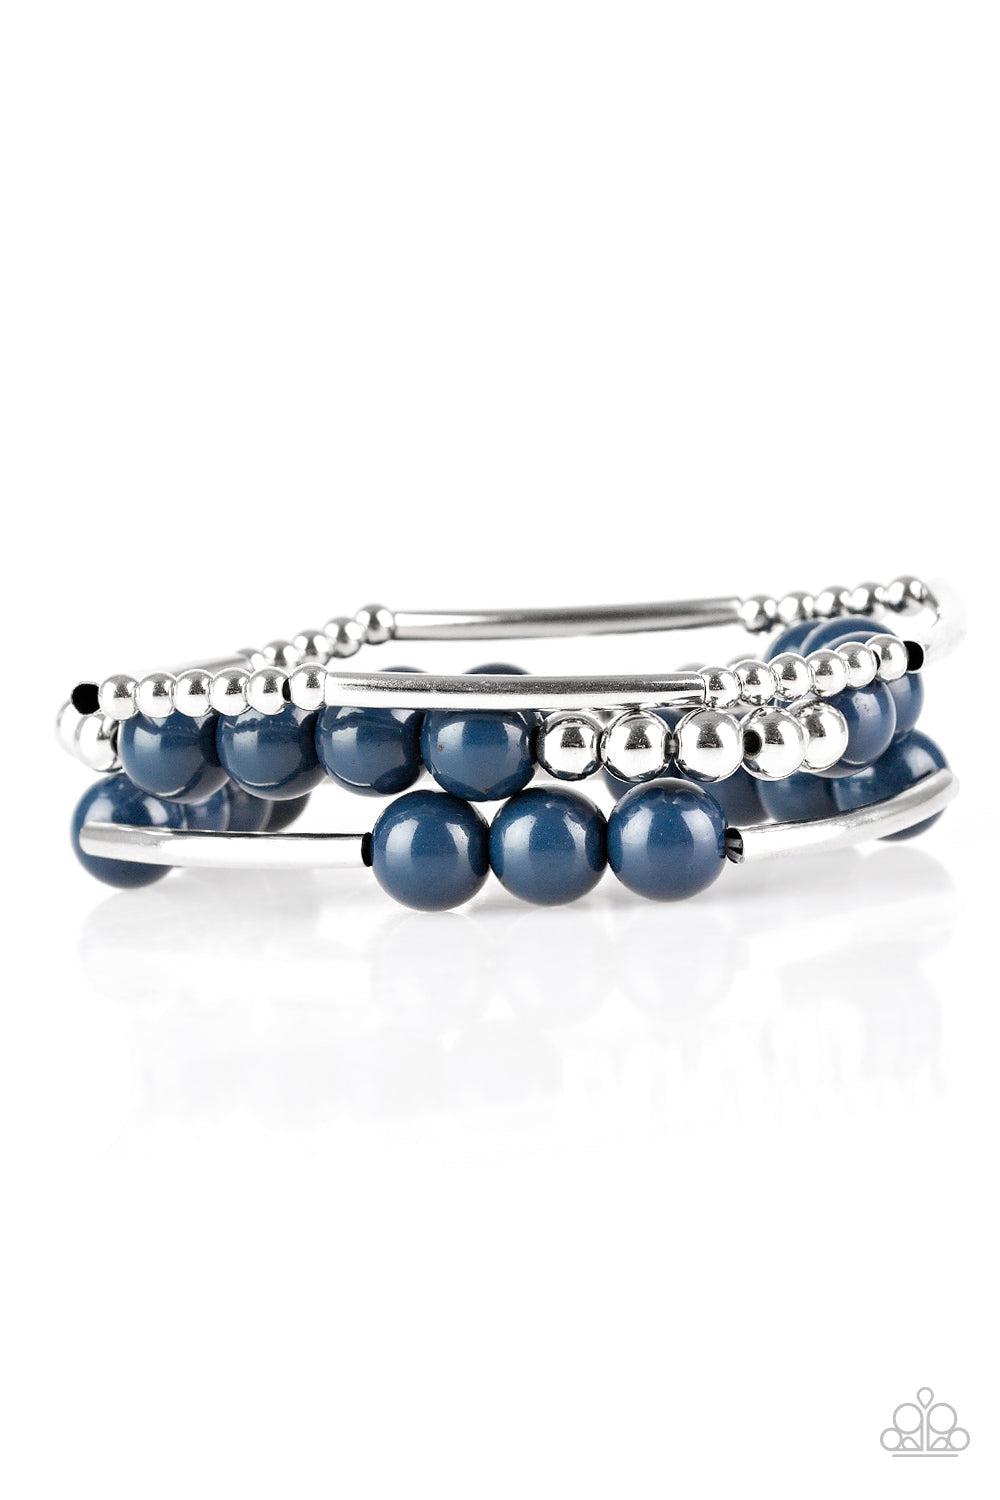 New Adventures Blue Bracelet - Paparazzi Accessories- lightbox - CarasShop.com - $5 Jewelry by Cara Jewels